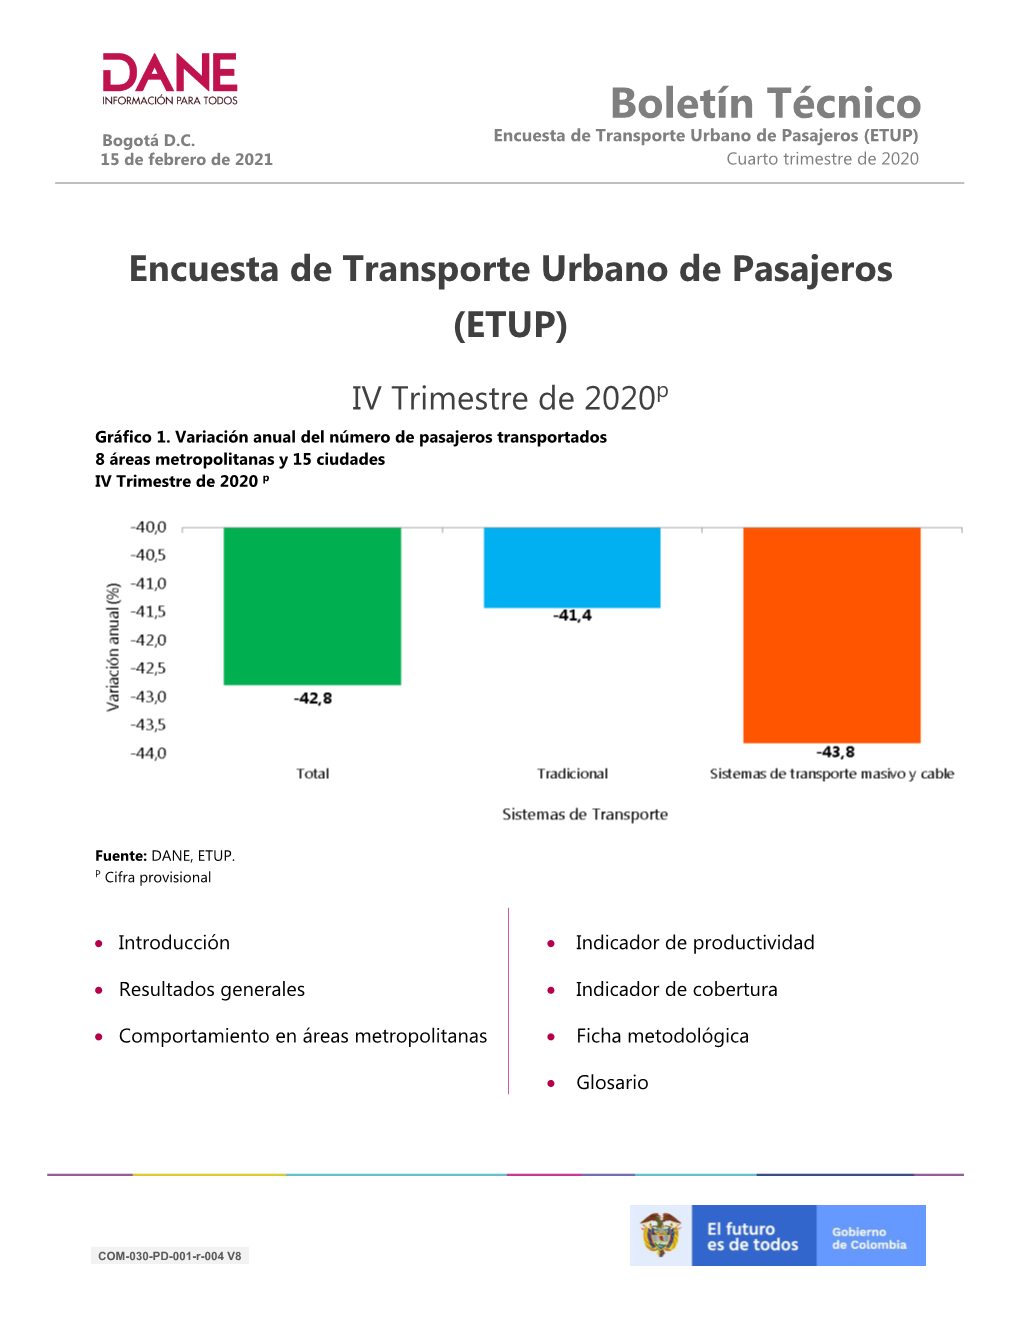 Boletín Técnico Encuesta De Transporte Urbano De Pasajeros (ETUP) Cuarto Trimestre De 2020